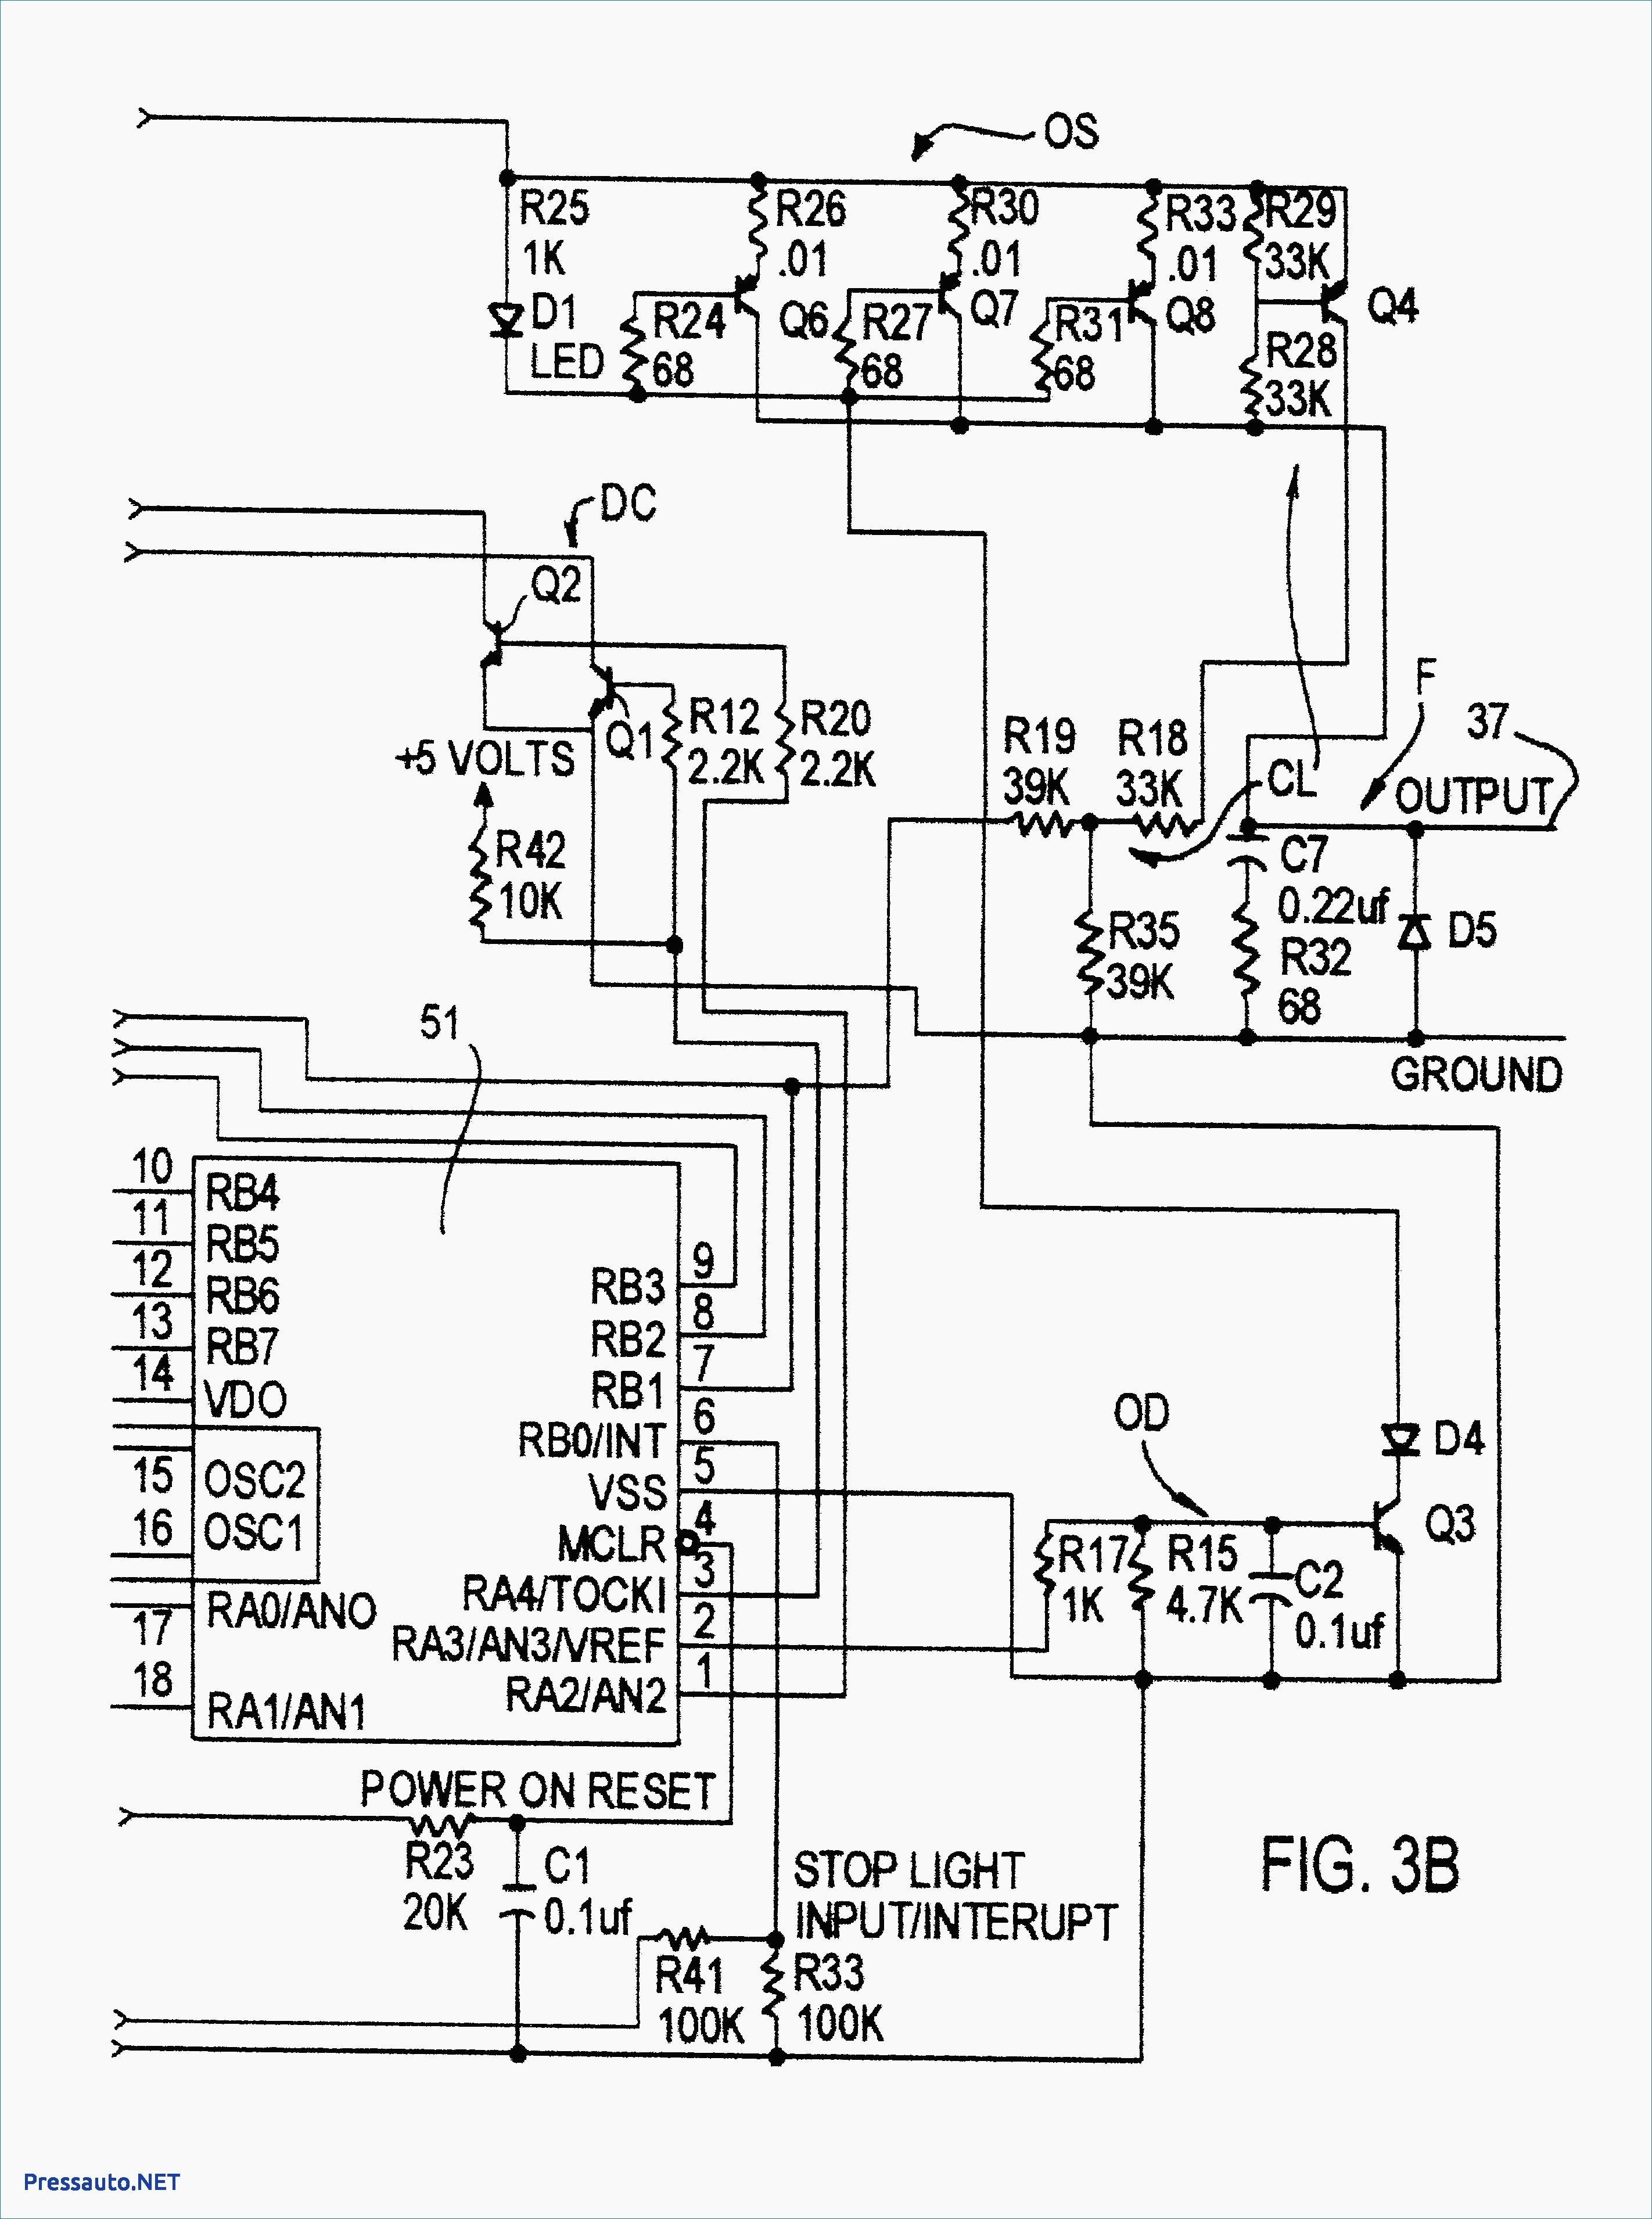 Guitar Wiring Diagram Creator Save Electric Circuit Guitar Wiring Diagram Creator Save Electric Circuit